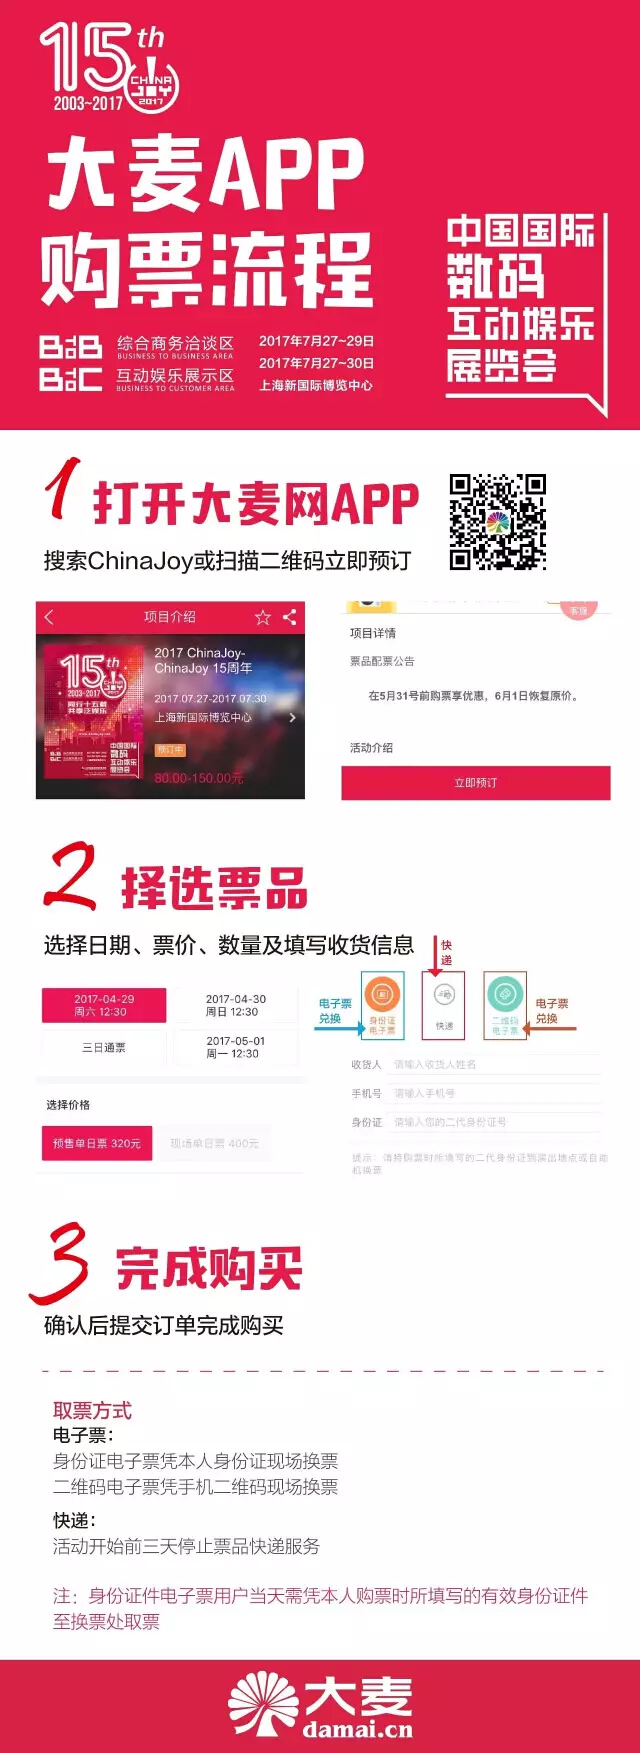 2017 ChinaJoy门票开卖 大麦网成销售总代理3.jpg